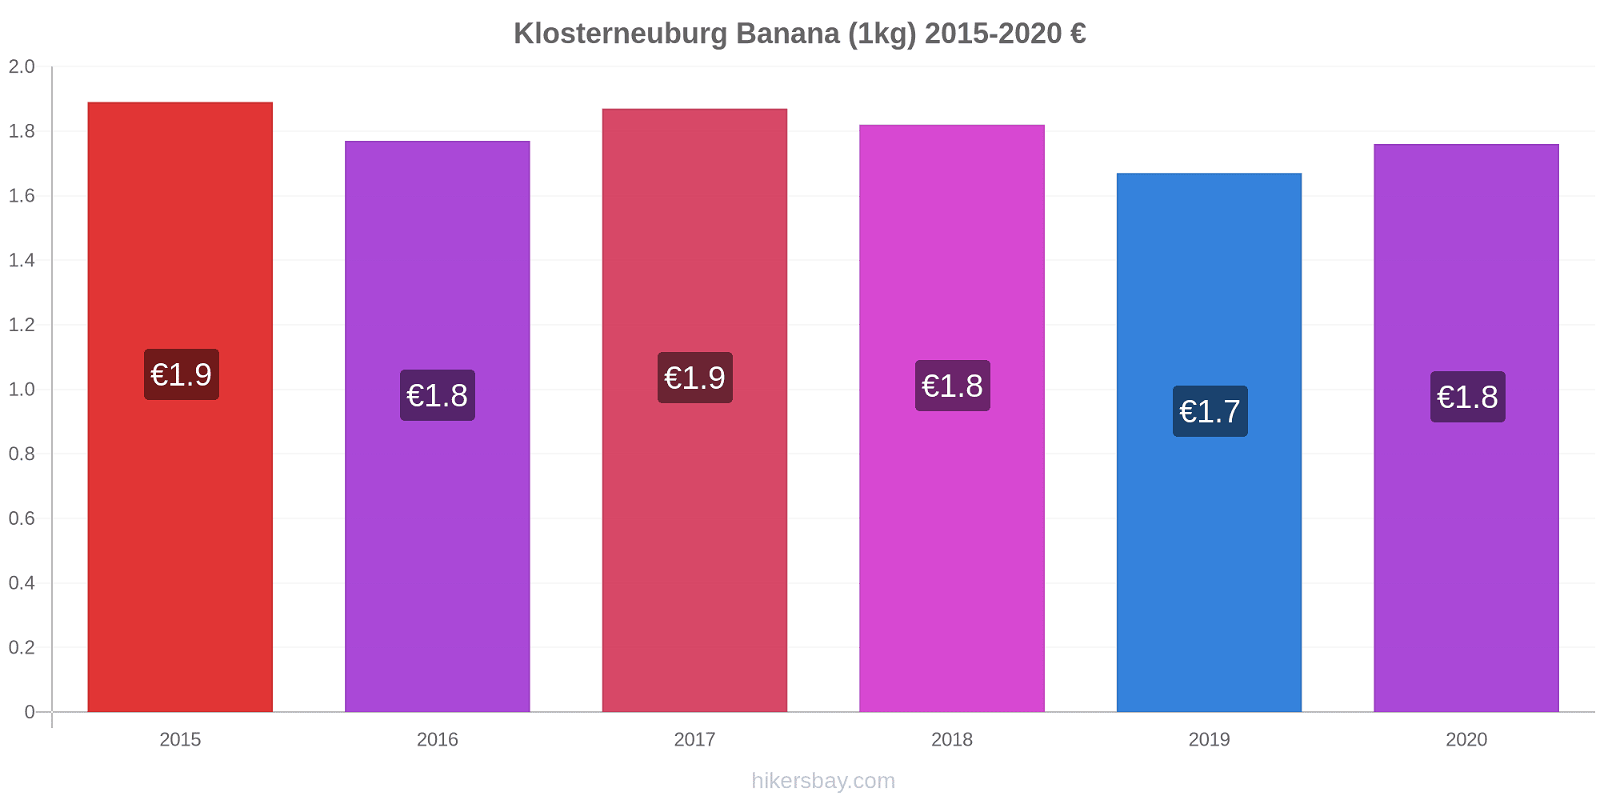 Klosterneuburg modificări de preț Banana (1kg) hikersbay.com